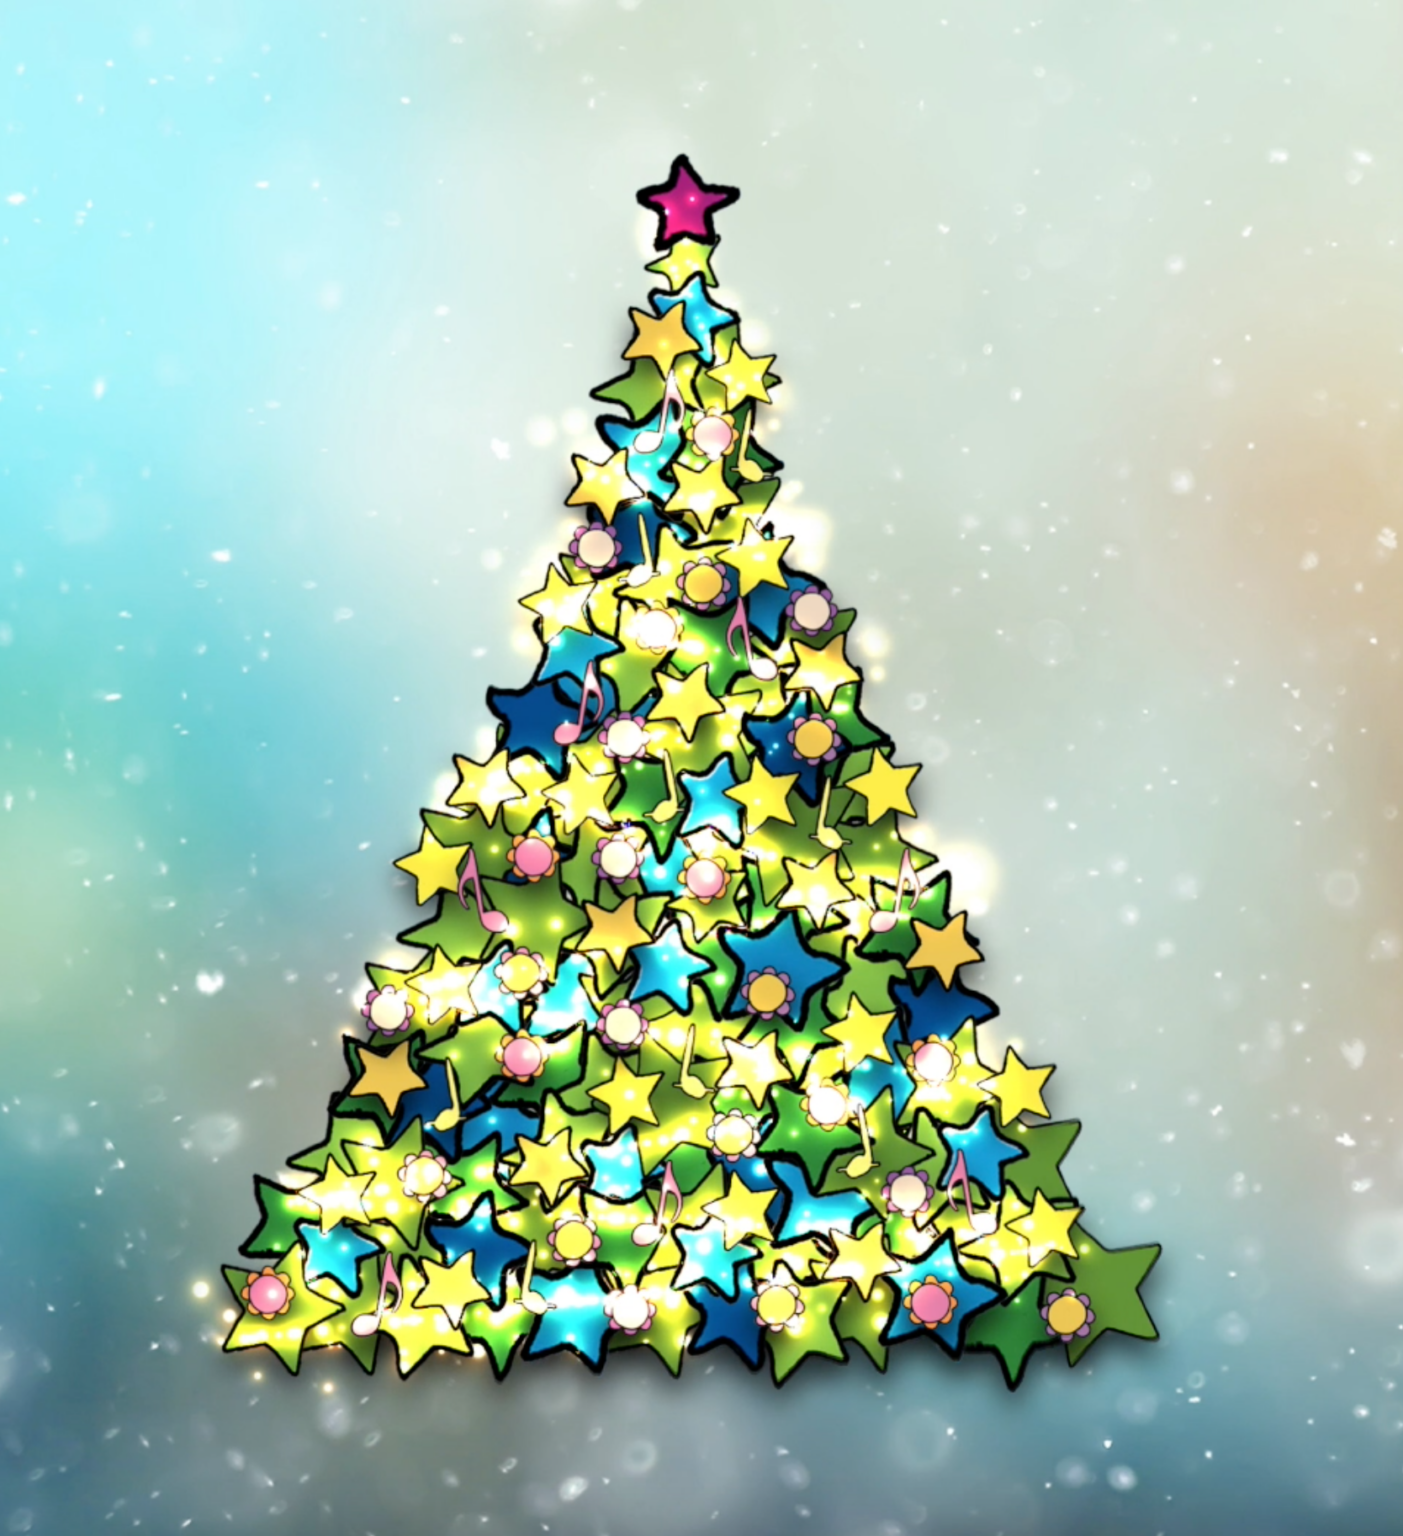 Lundahl Transformers Christmas tree